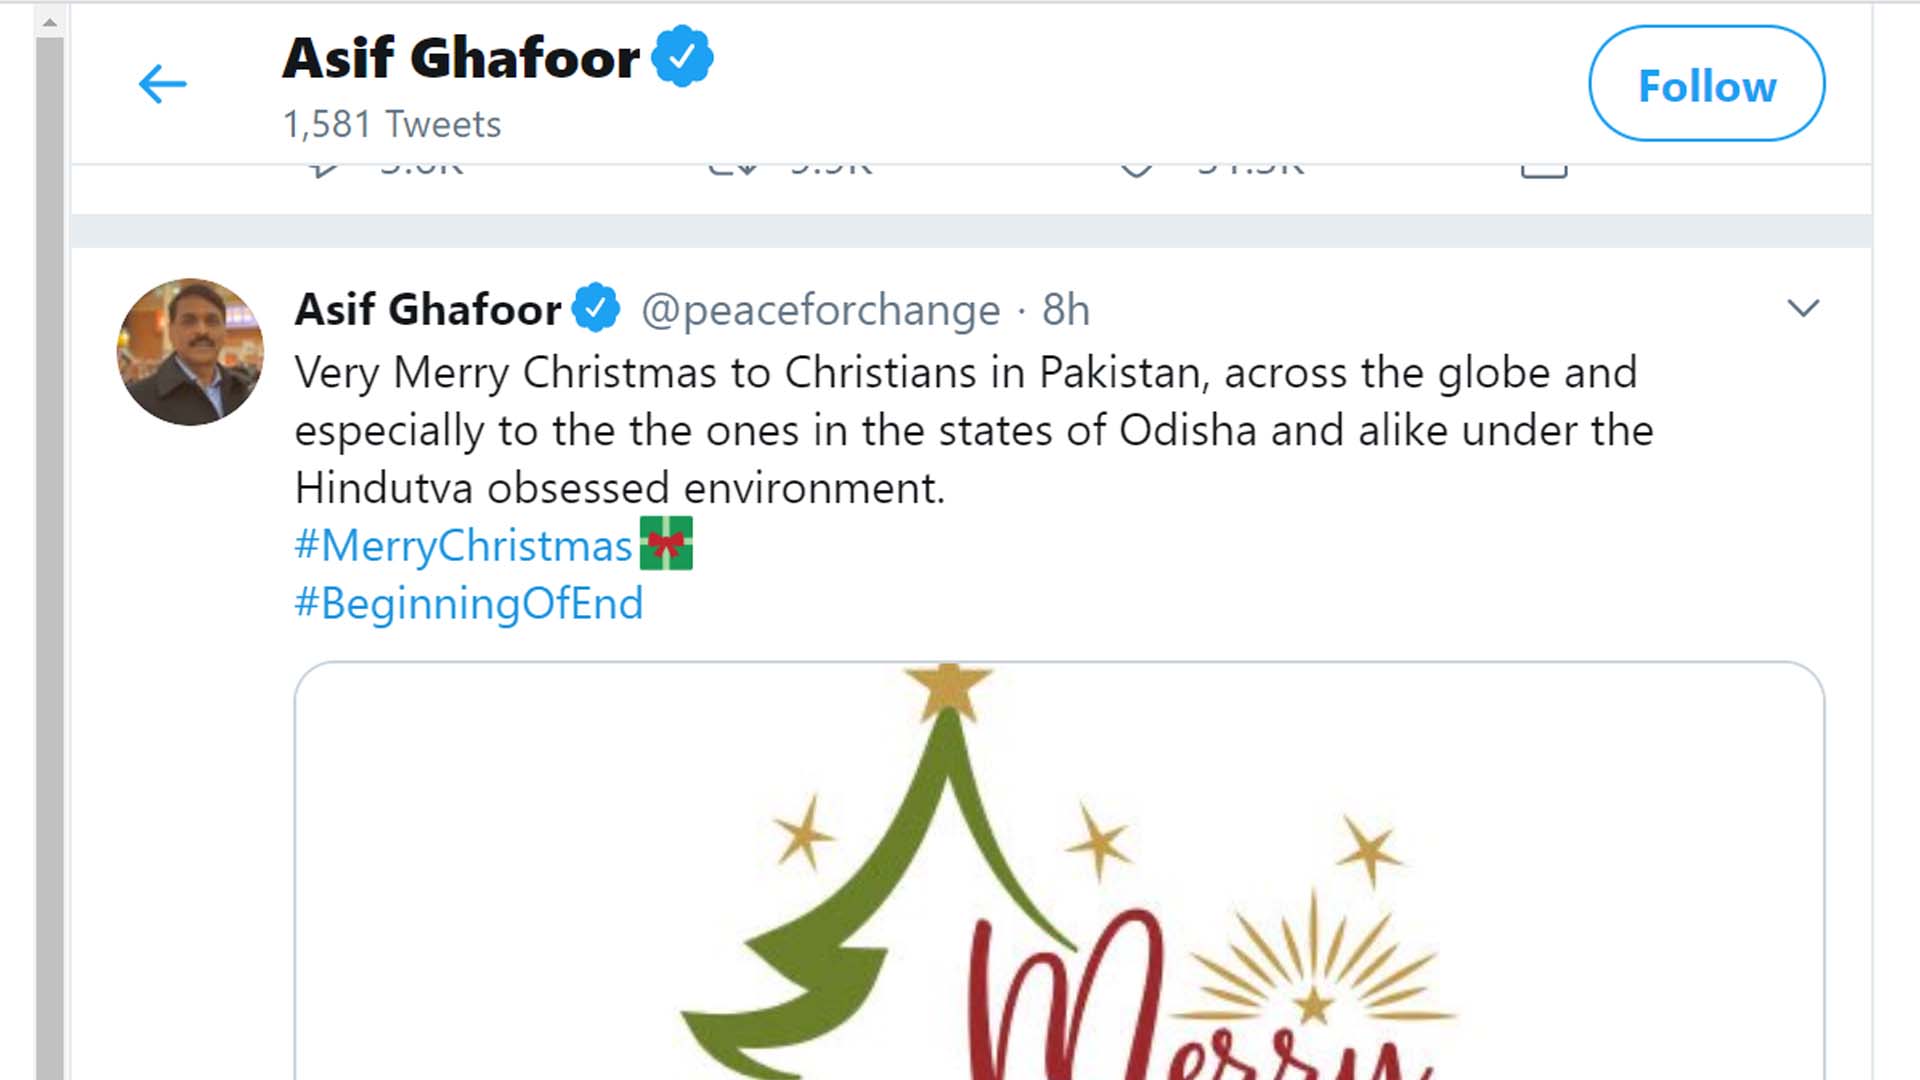 Asif Ghafoor wishes Merry Christmas to Odisha Christians